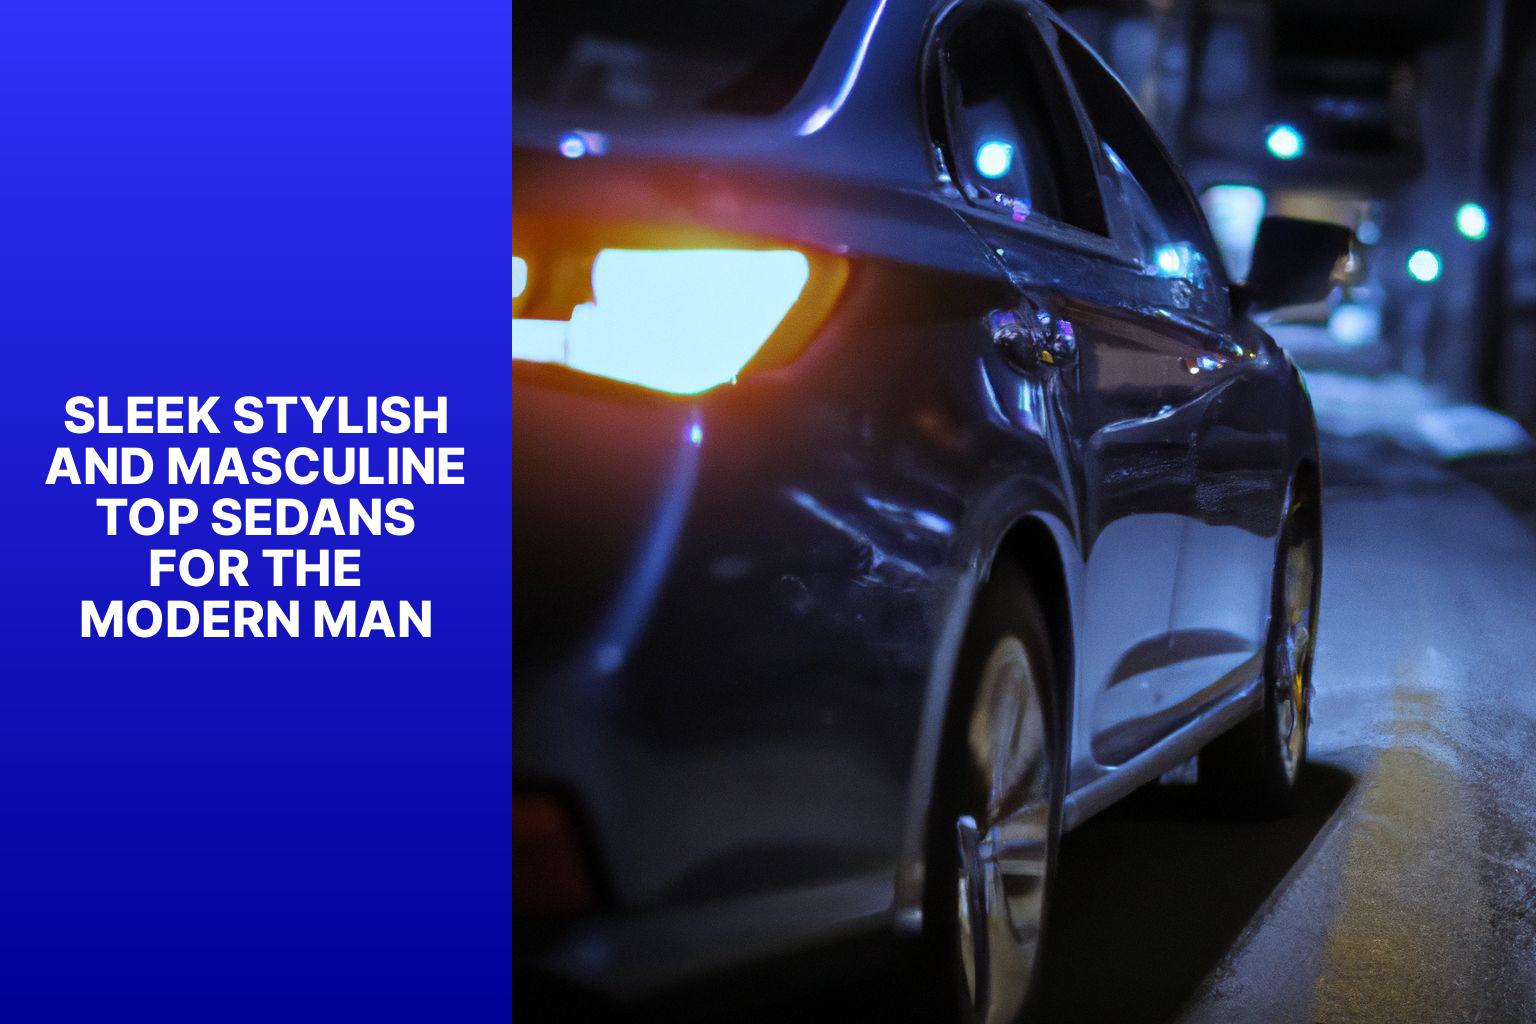 Sleek, Stylish, and Masculine: Top Sedans for the Modern Man